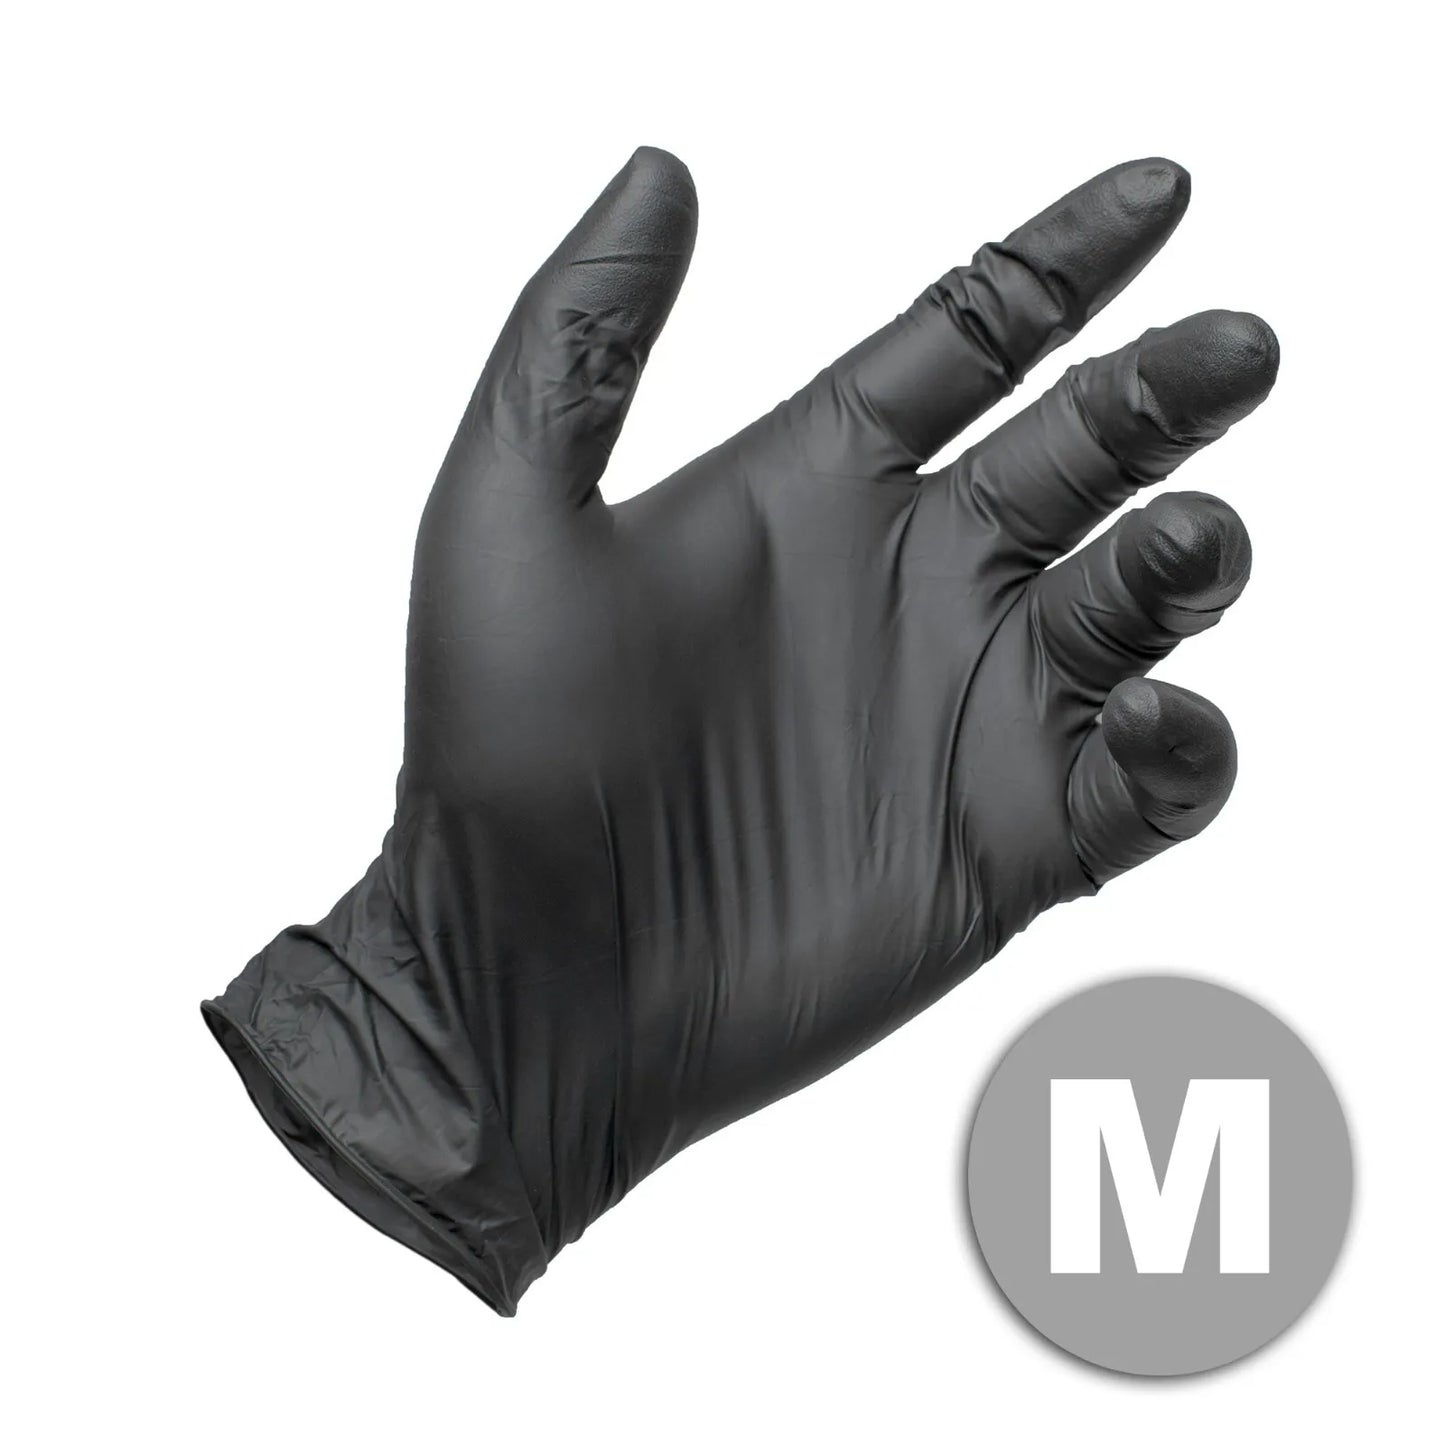 One Box (100 Gloves) - Size Medium - Black Nitrile Powder Free Medical Exam Tattoos Piercing Gloves